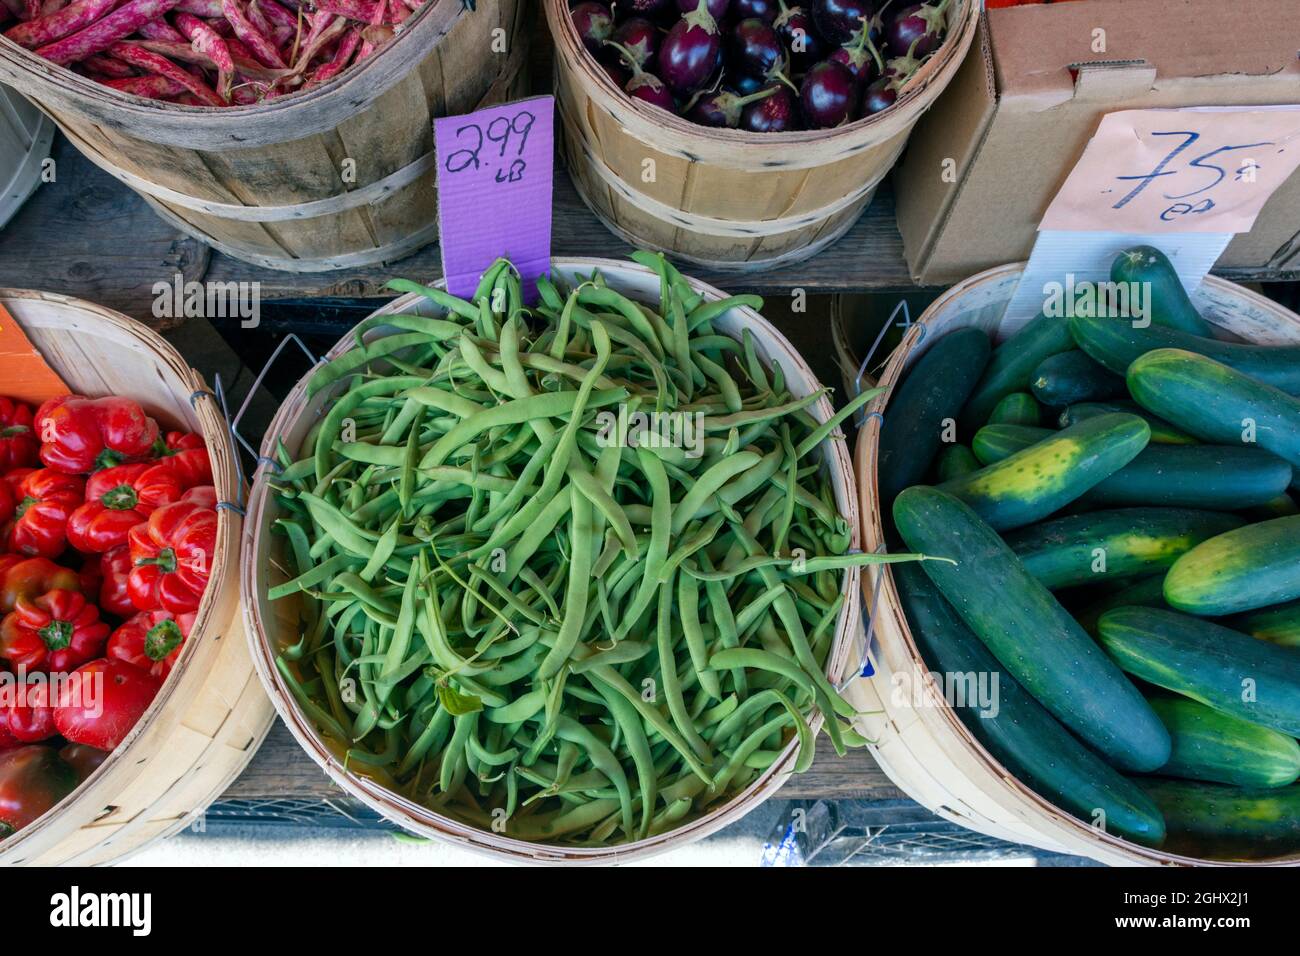 Fresh harvest of Mediterranean diet vegetables seen at the market. Stock Photo